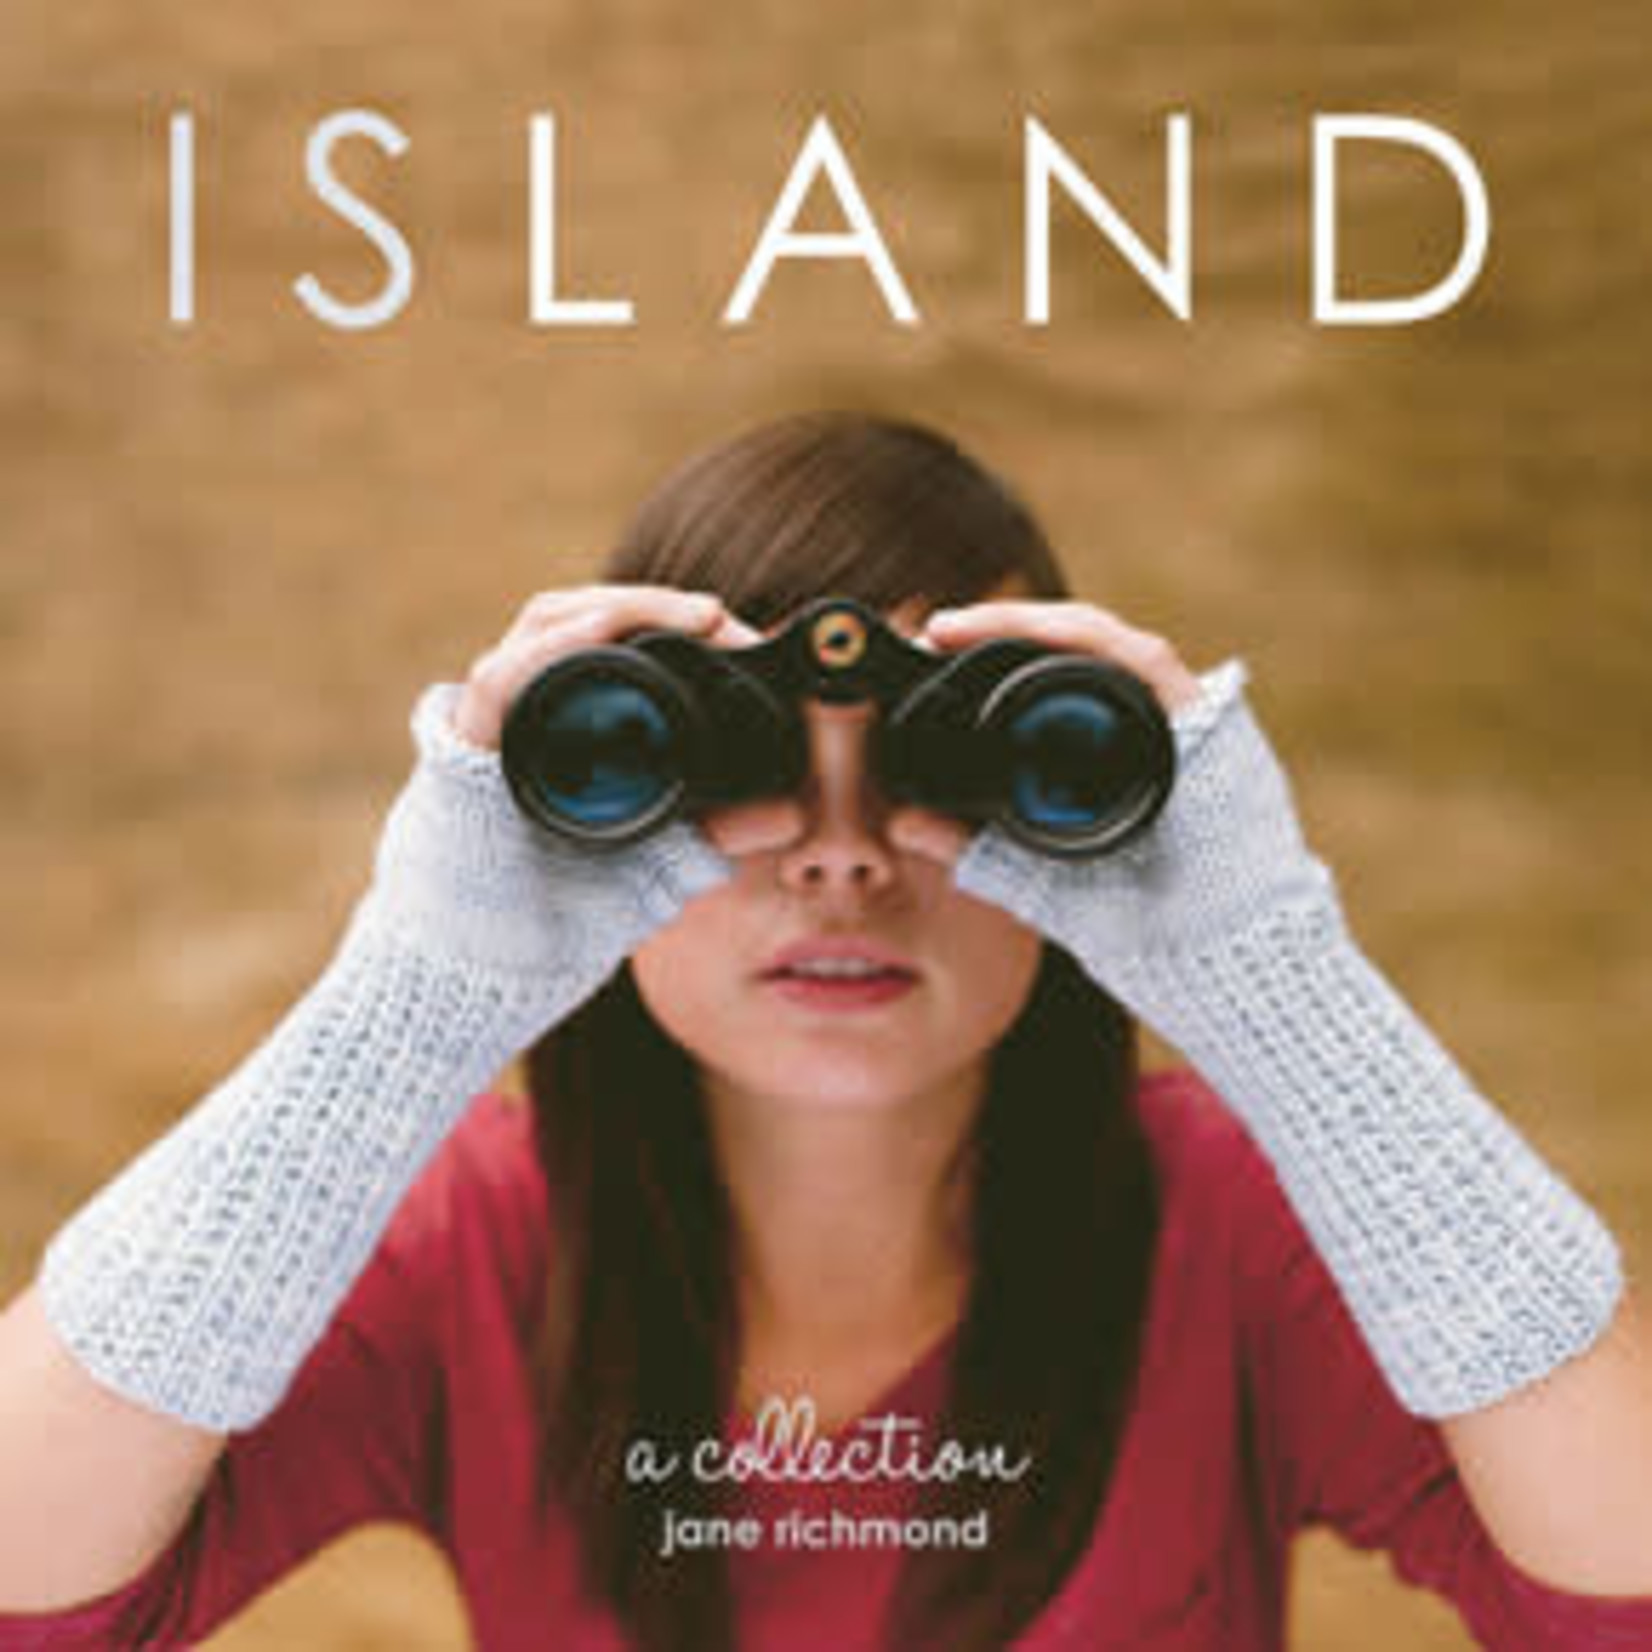 Jane Richmond Island, A Collection by Jane Richmond